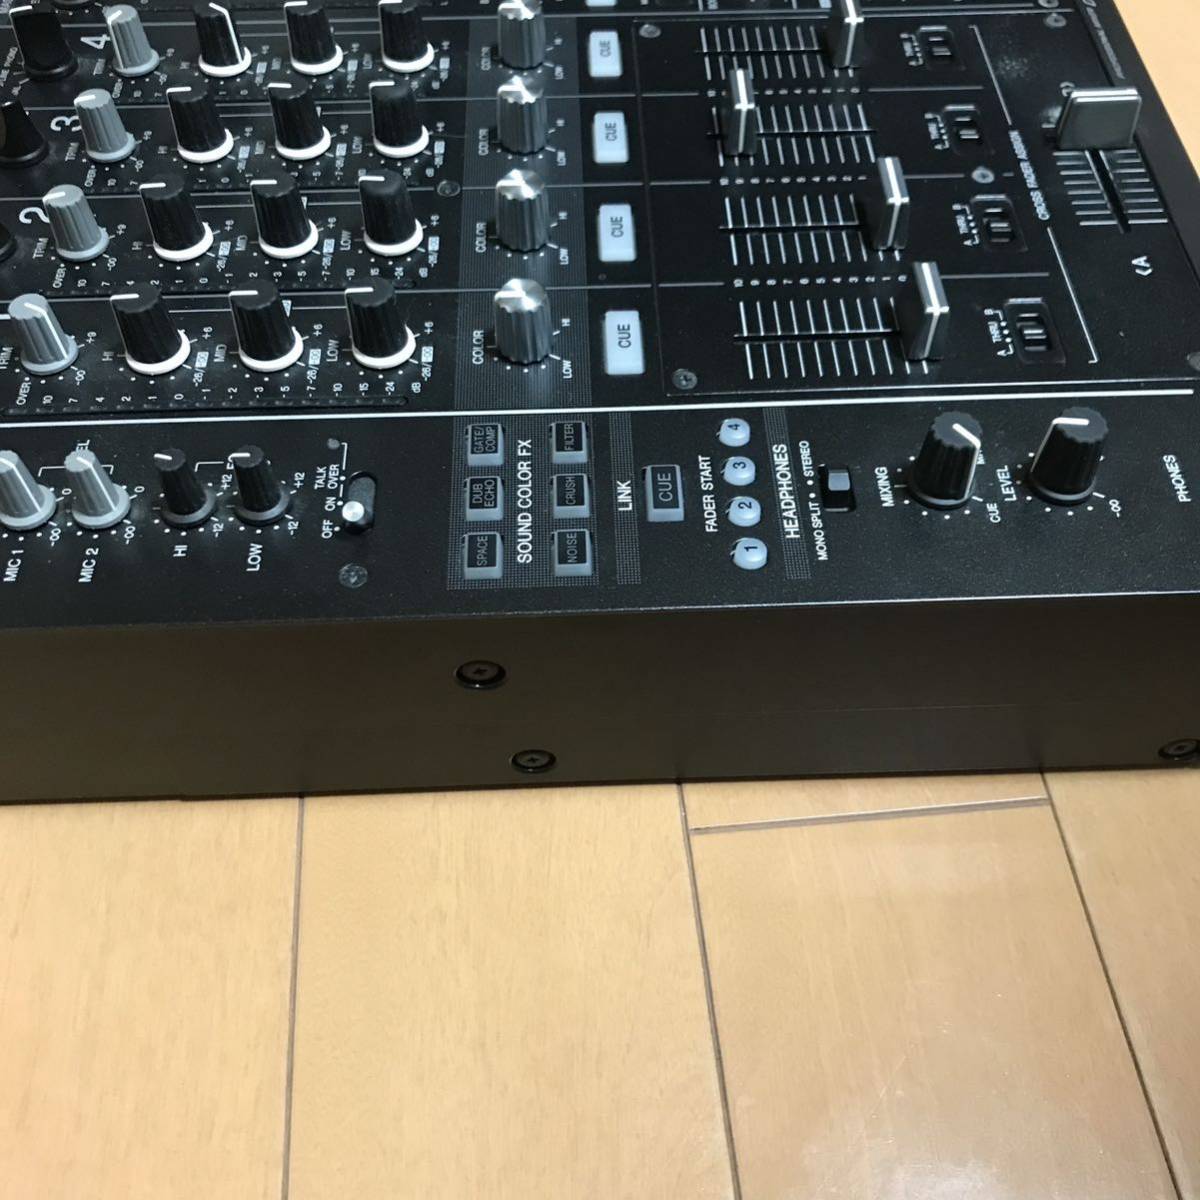 【希少】DJM900 SRT serato Pioneer